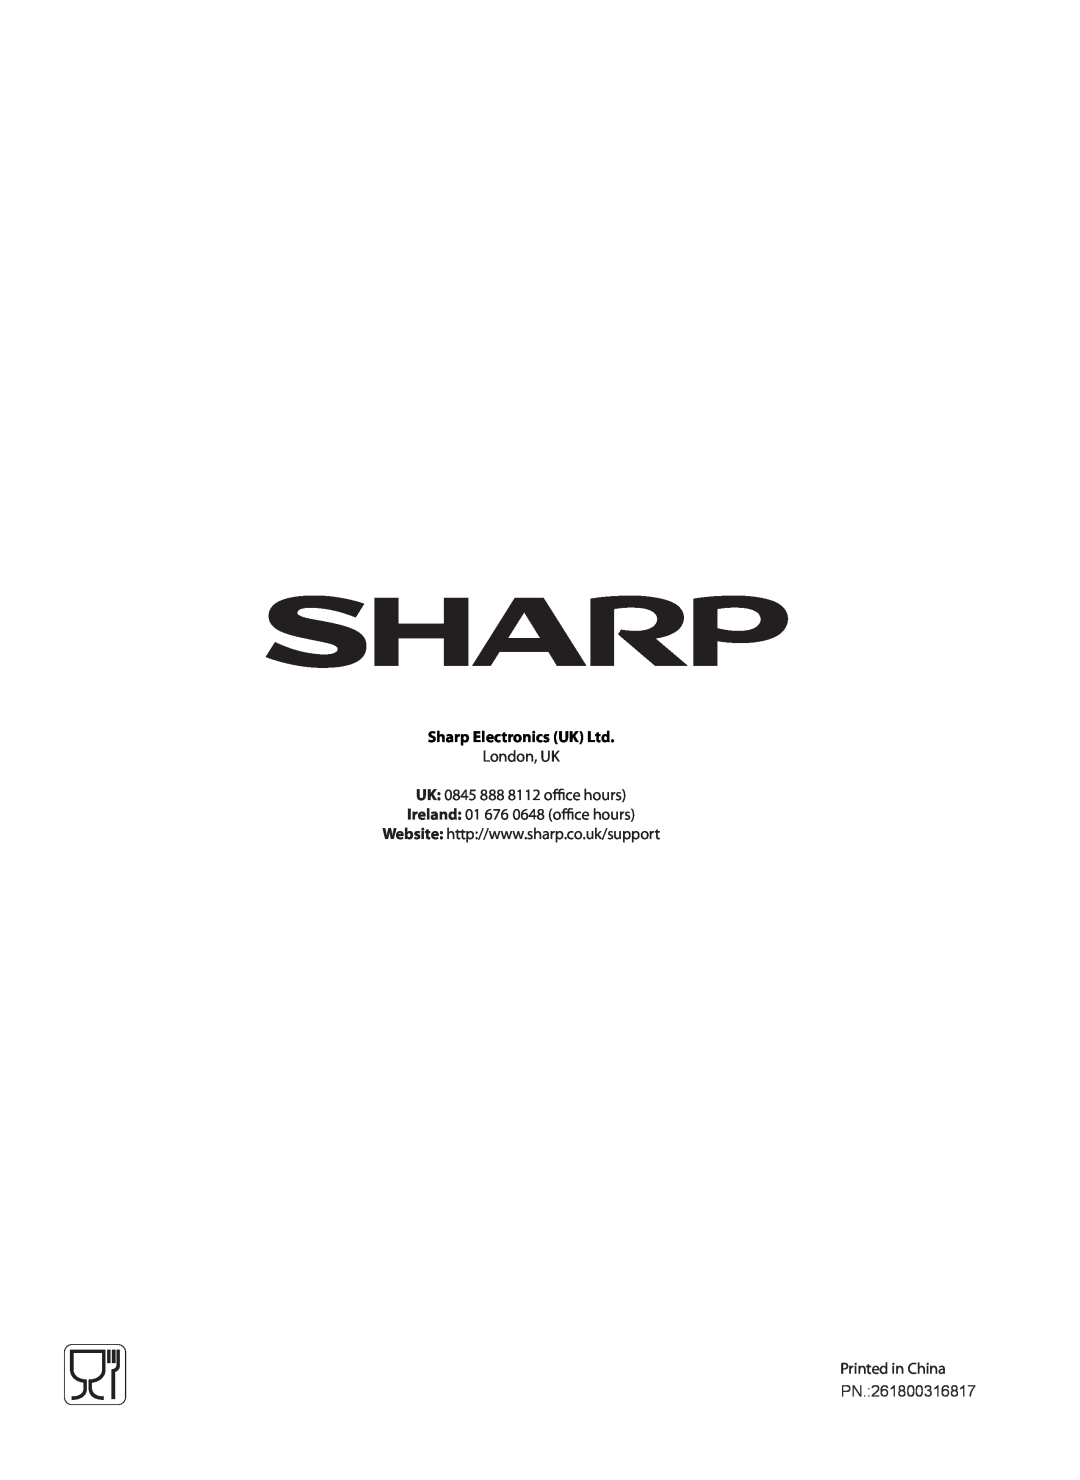 Sharp R-982STM operation manual London, UK UK 0845 888 8112 office hours, Ireland 01 676 0648 office hours, Pn 